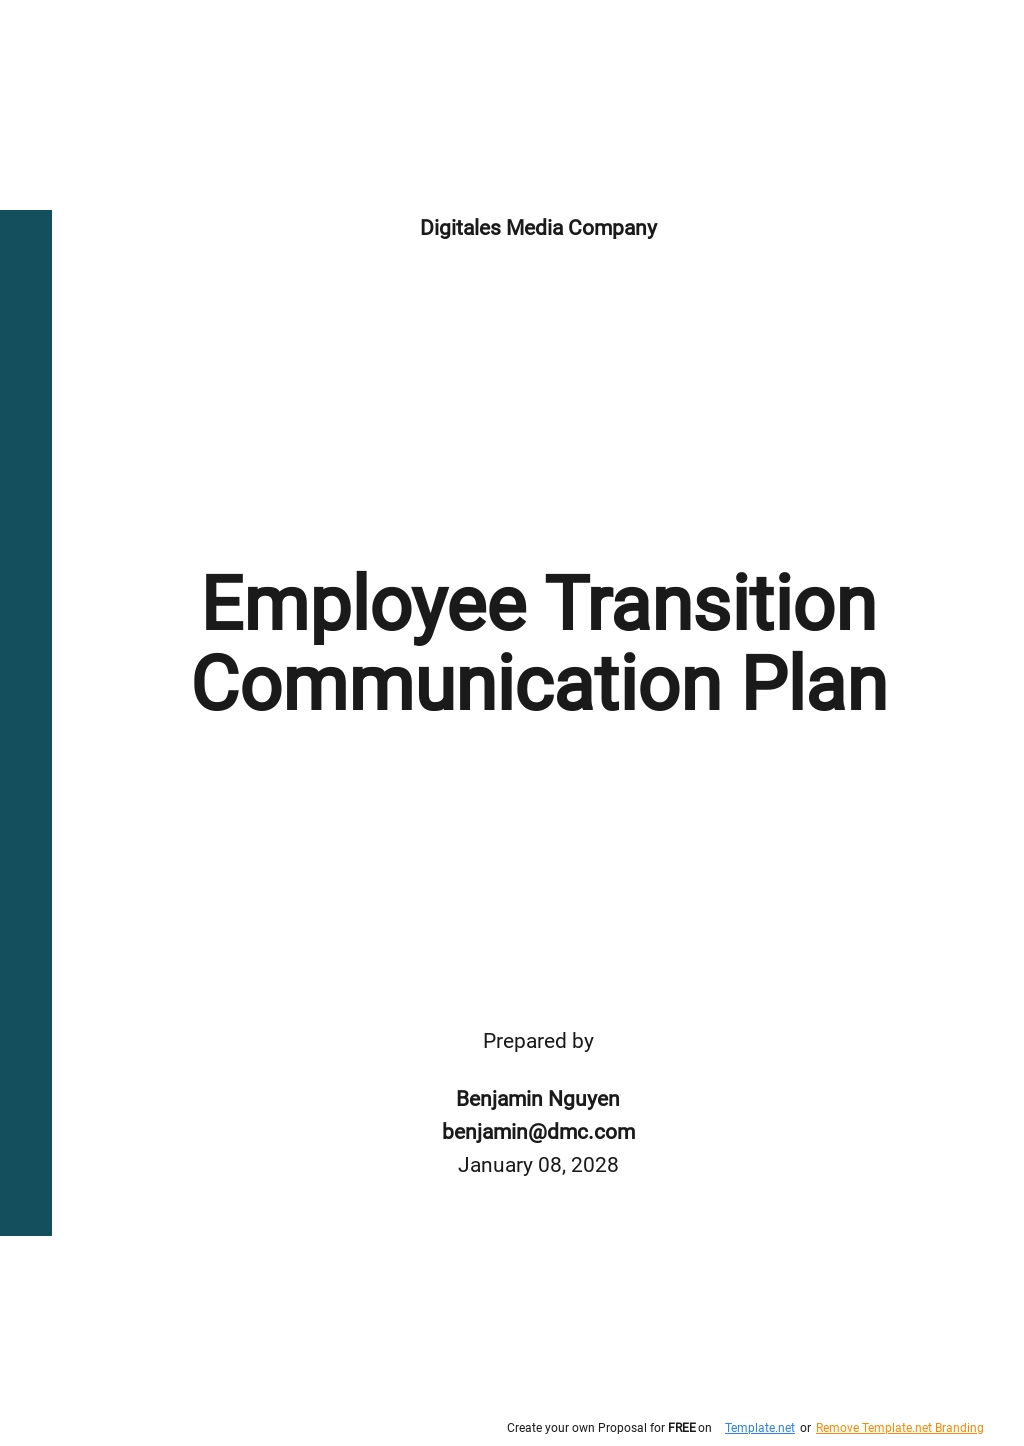 Employee Transition Communication Plan Template